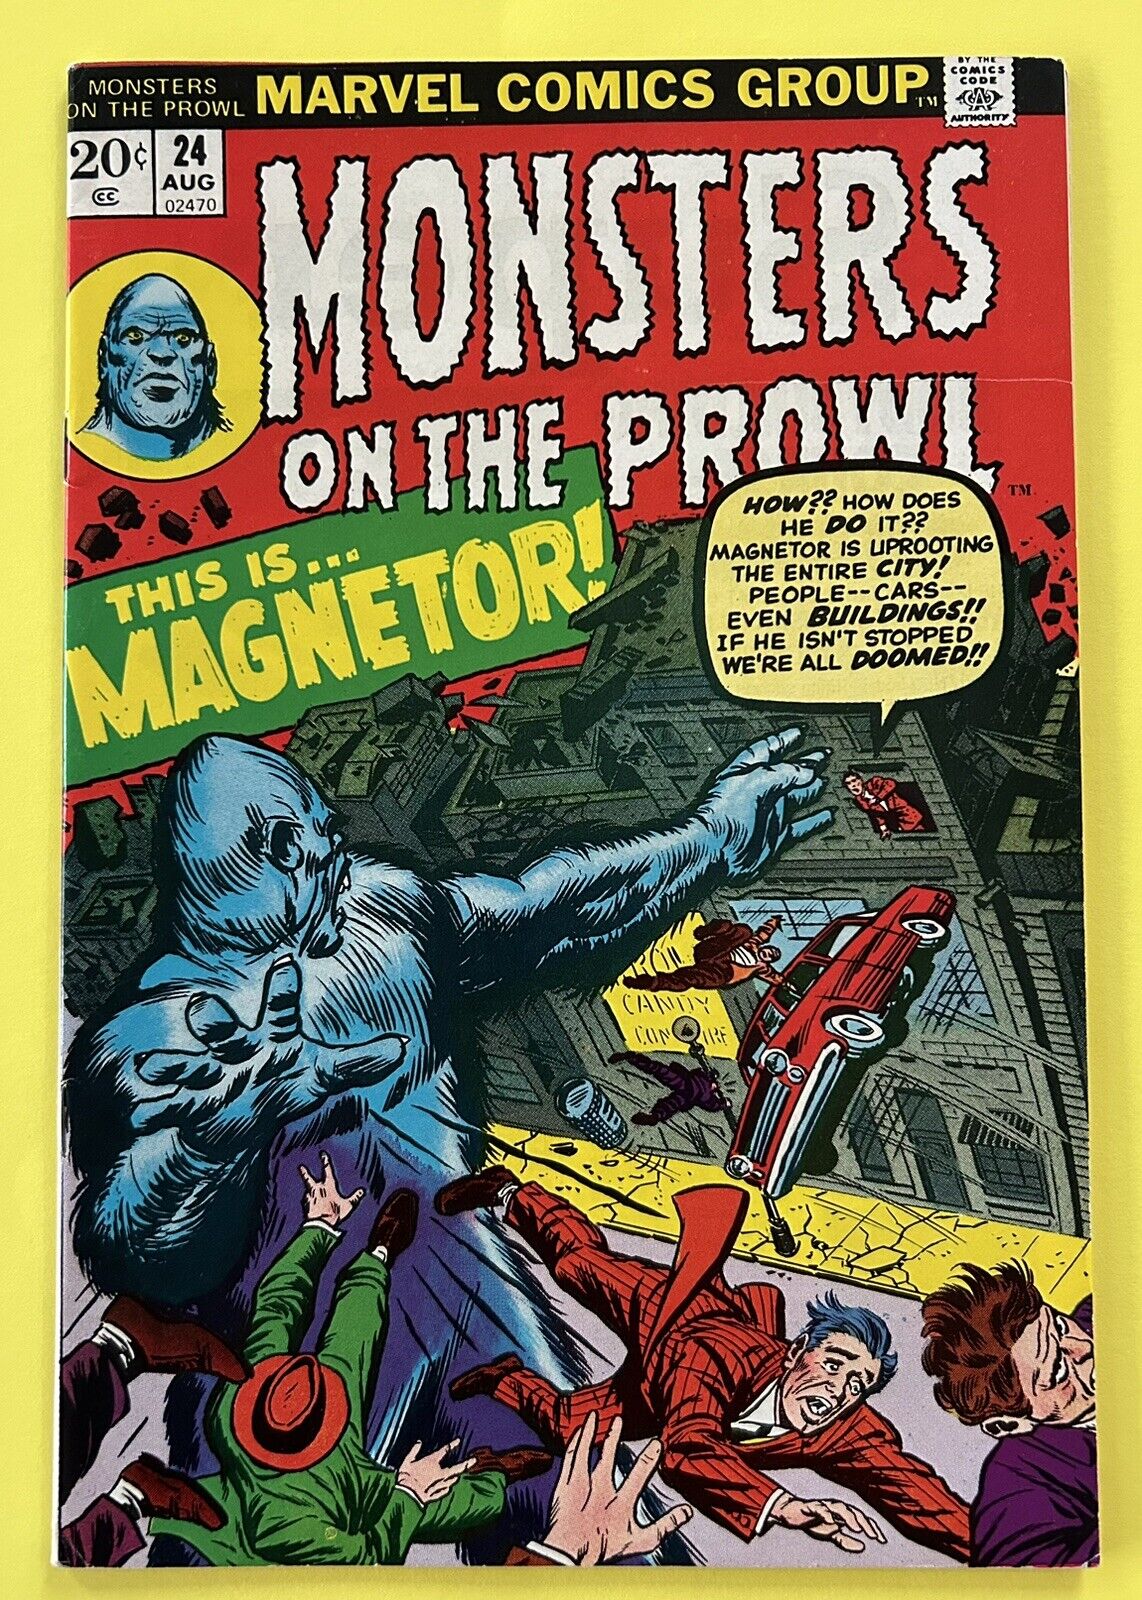 MONSTERS ON THE PROWL #24, Magnetor (Marvel 1973) Bronze Age. F/VF.